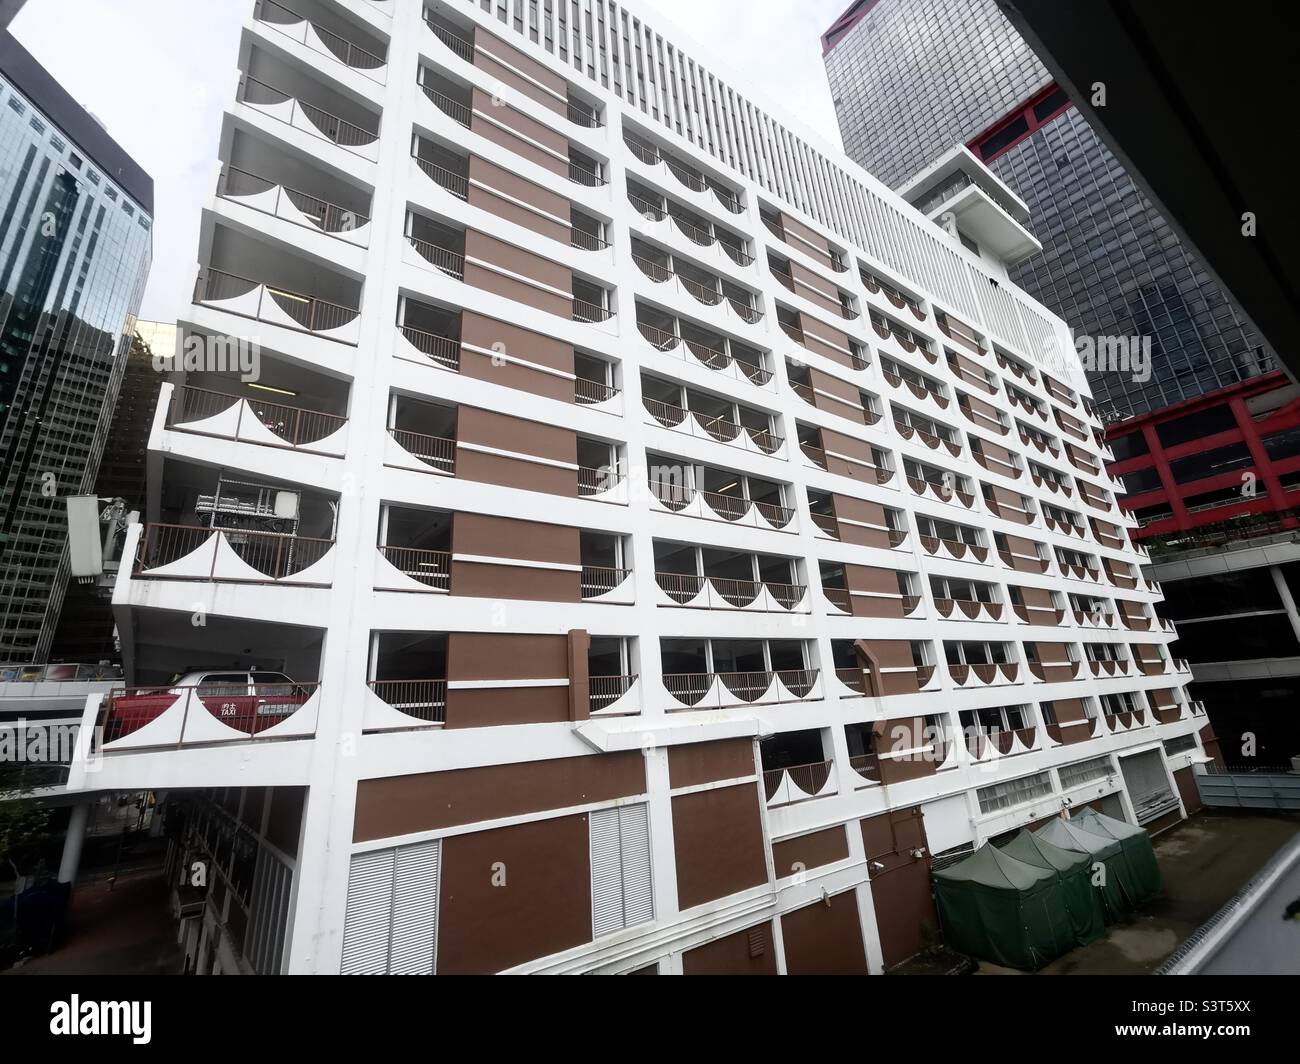 Rumsey street multi story car park in Sheung wan, Hong Kong. Stock Photo